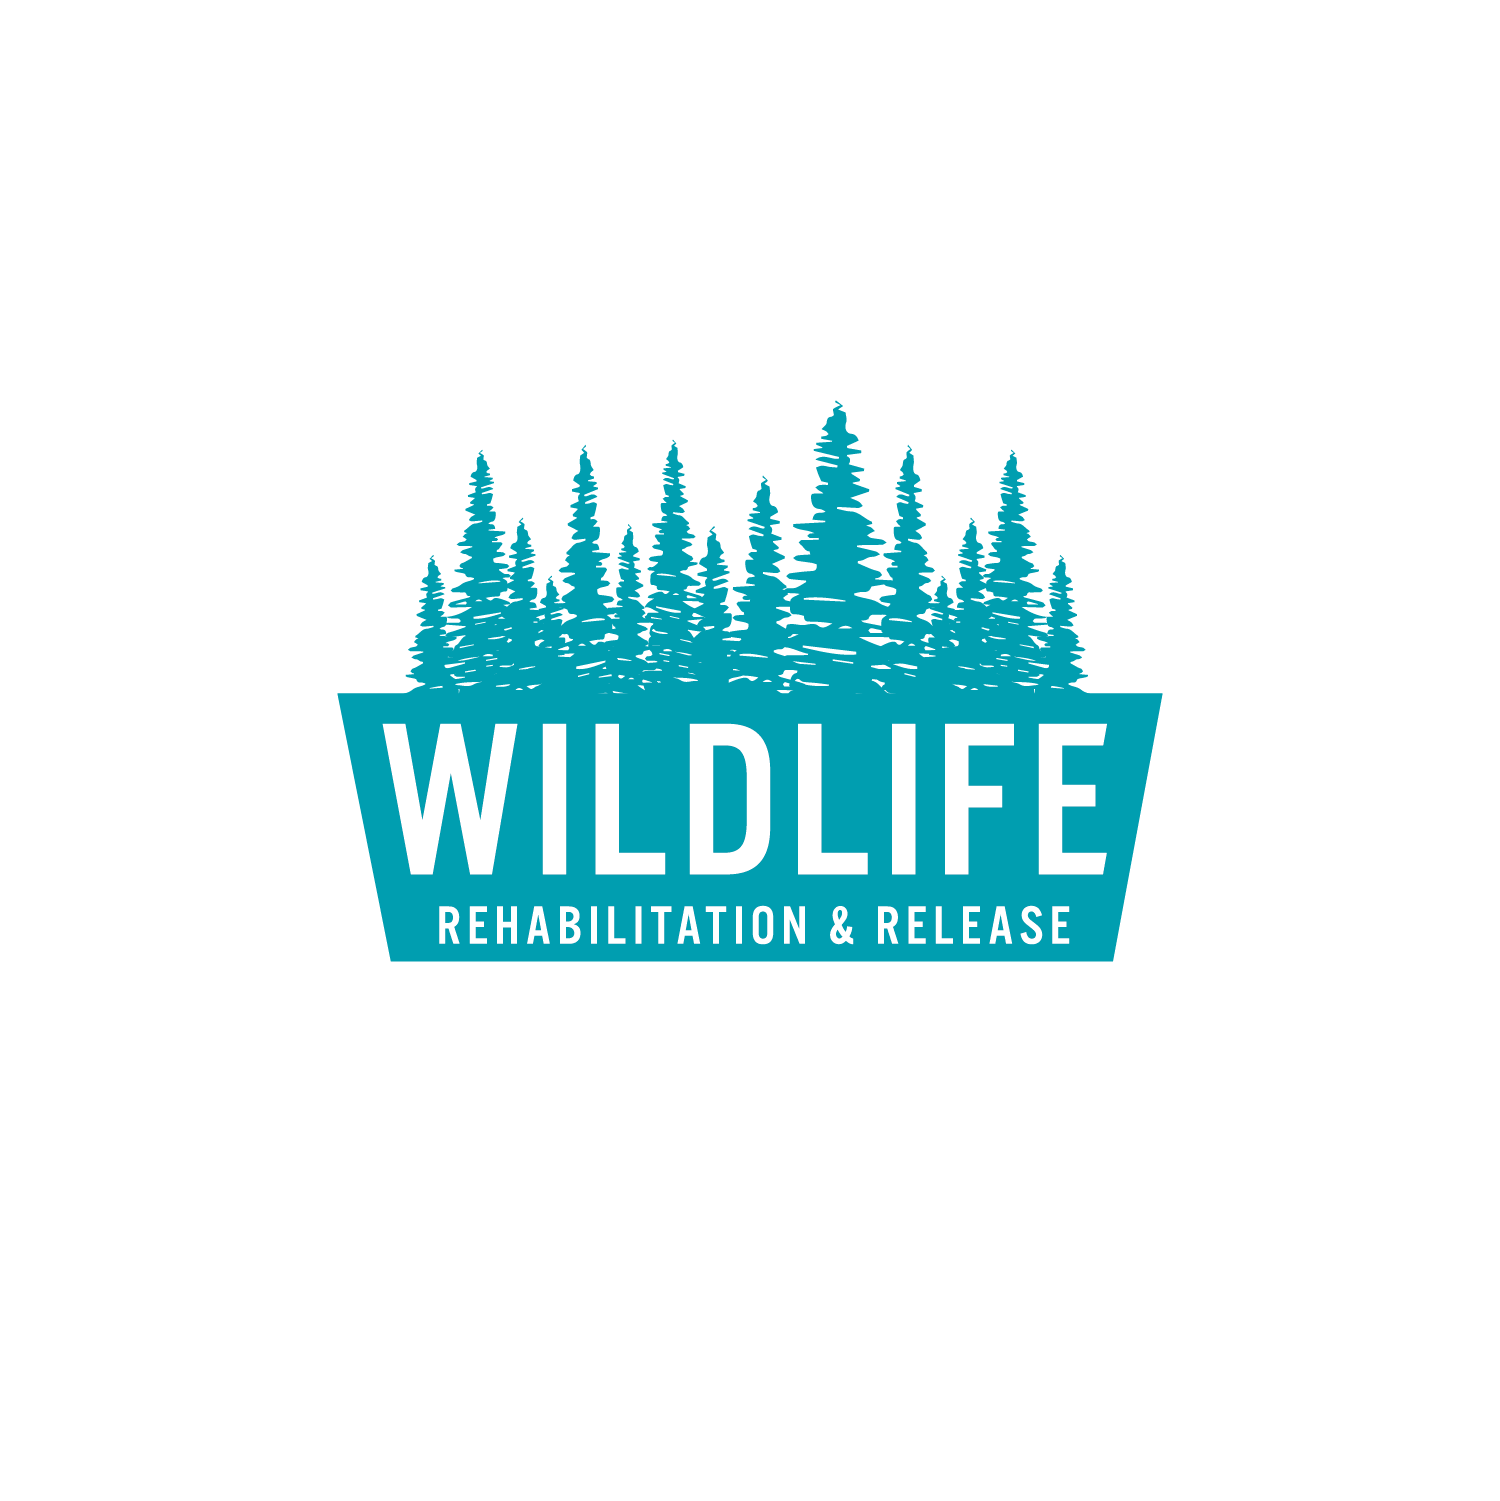 Wildlife Rehabilitation & Release logo by OLSON MCINTYRE